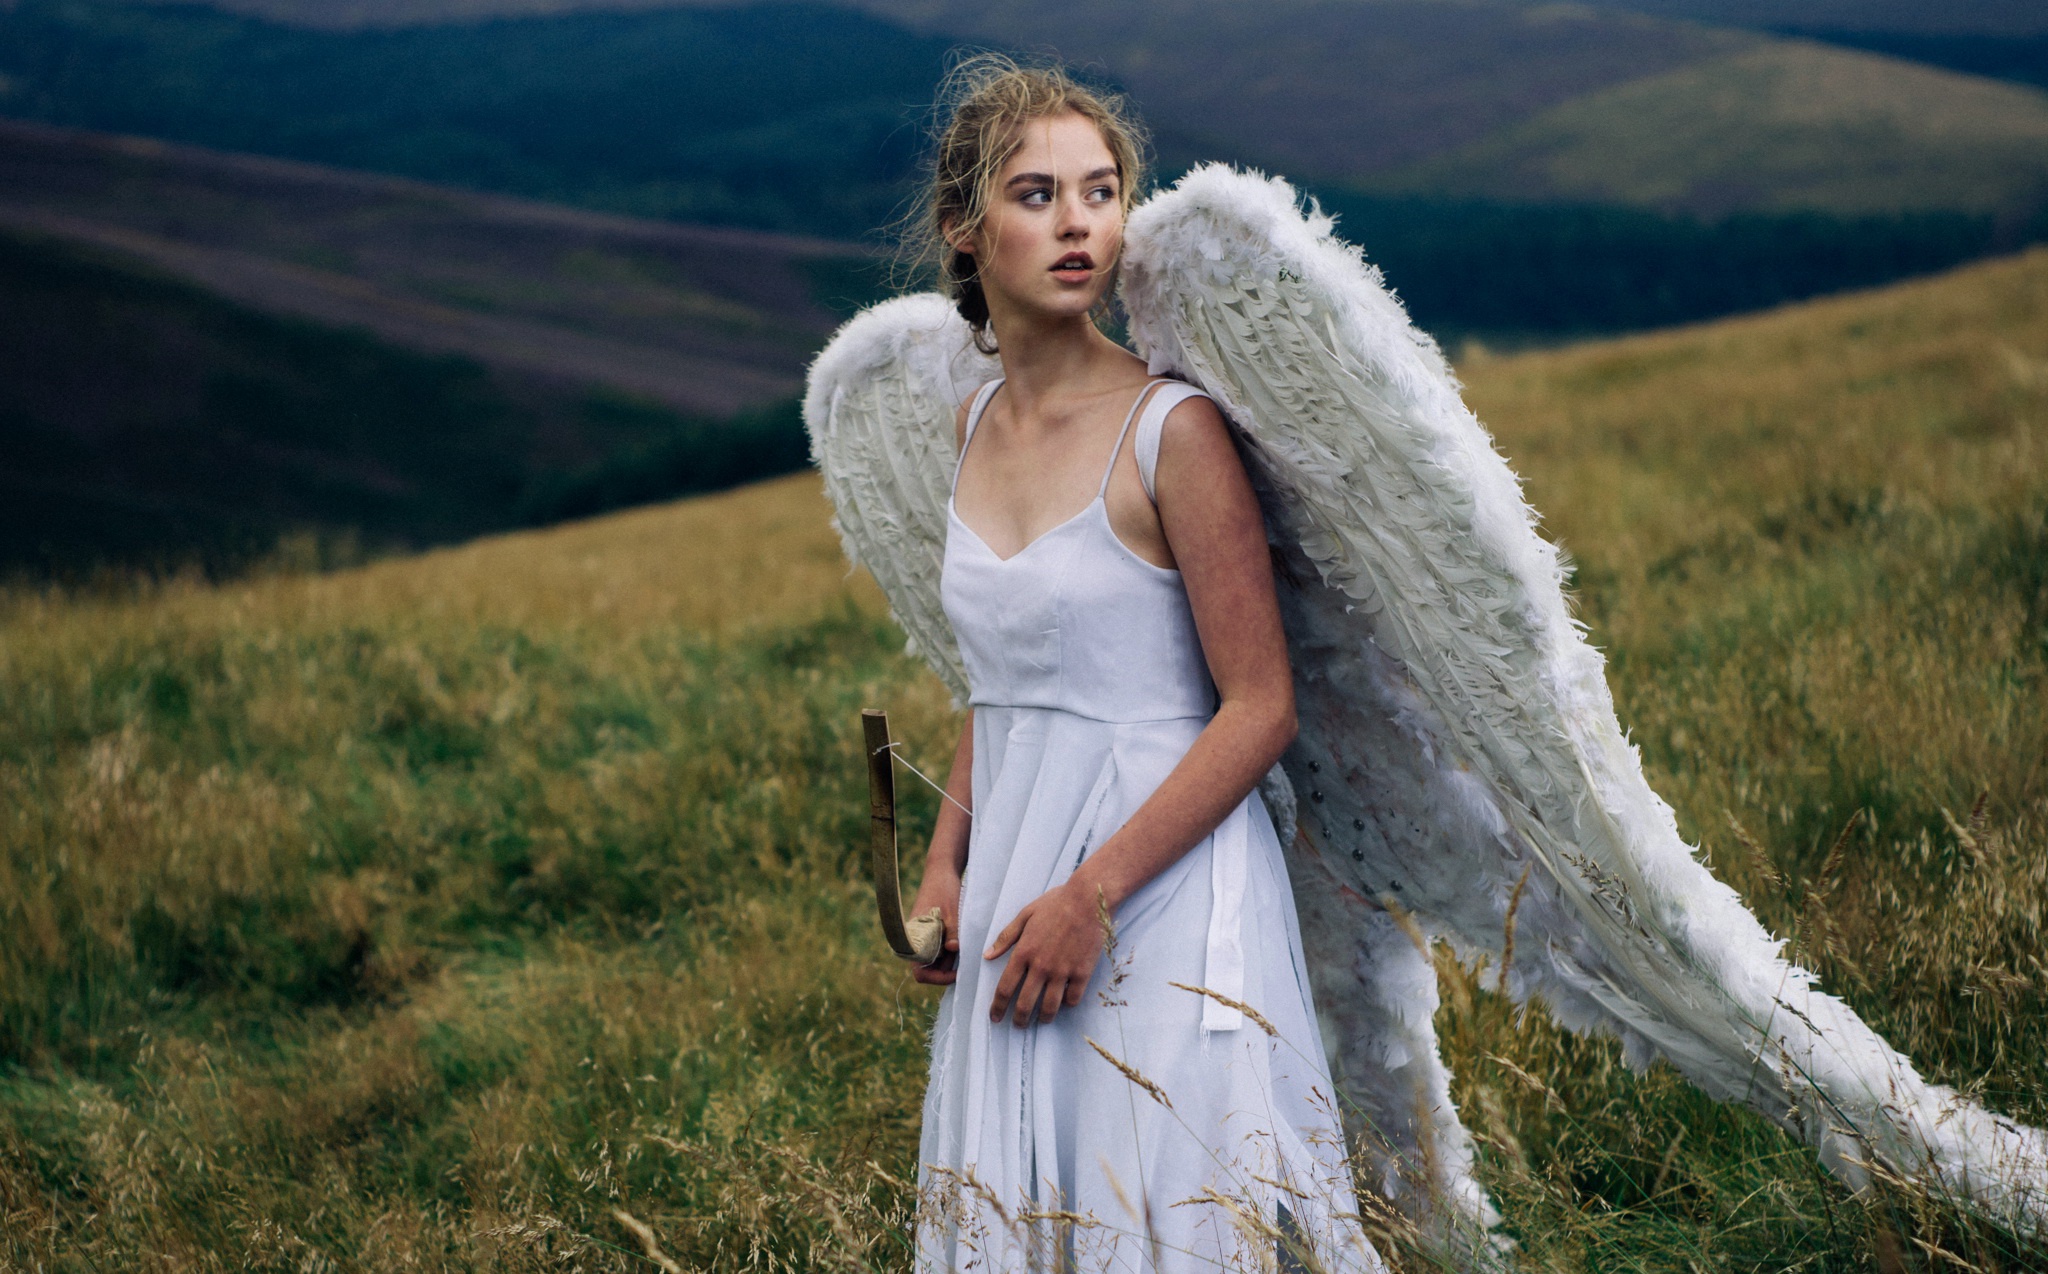 Angels women. Девушка - ангел. Дева-ангел. Девушка с крыльями. Фотосессия с крыльями.